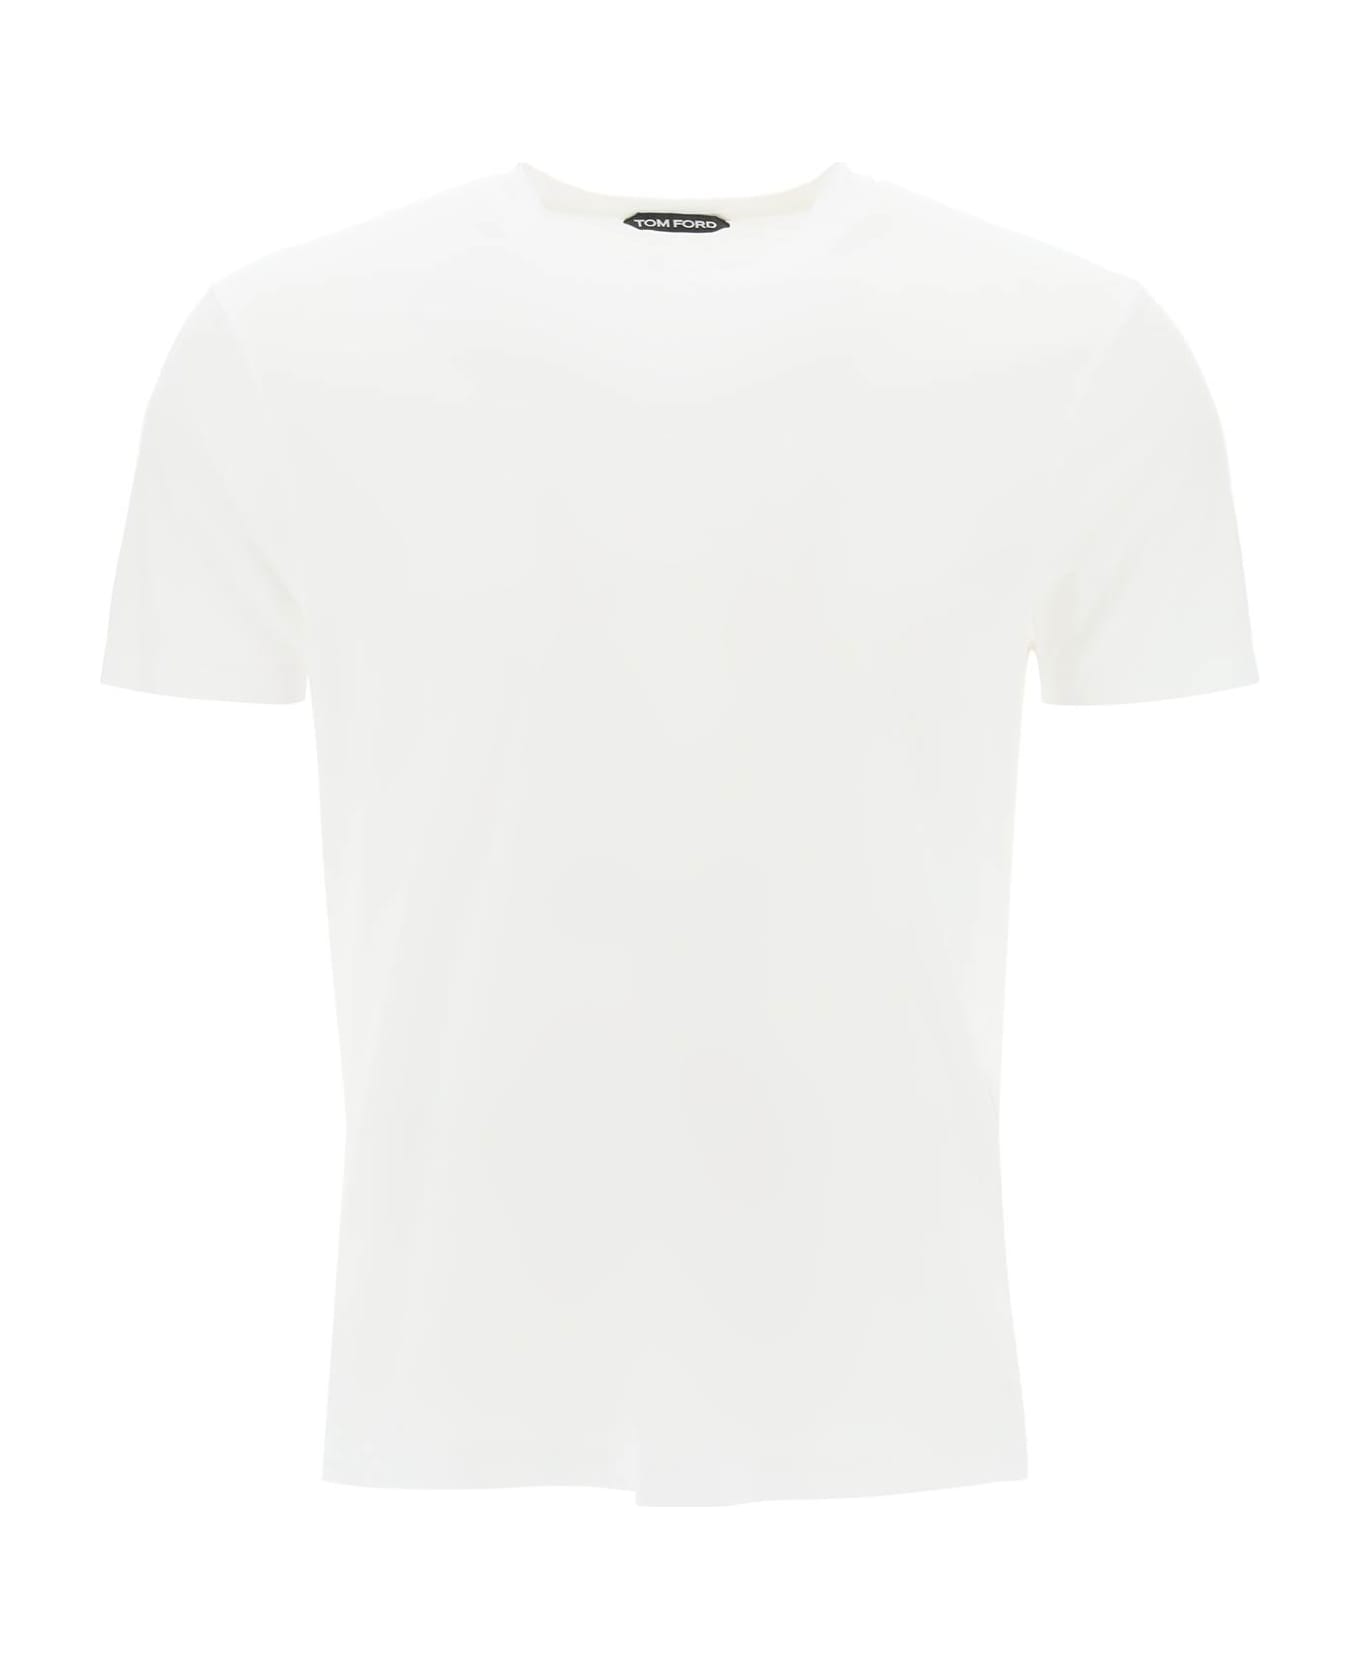 Tom Ford T-shirt - Cream